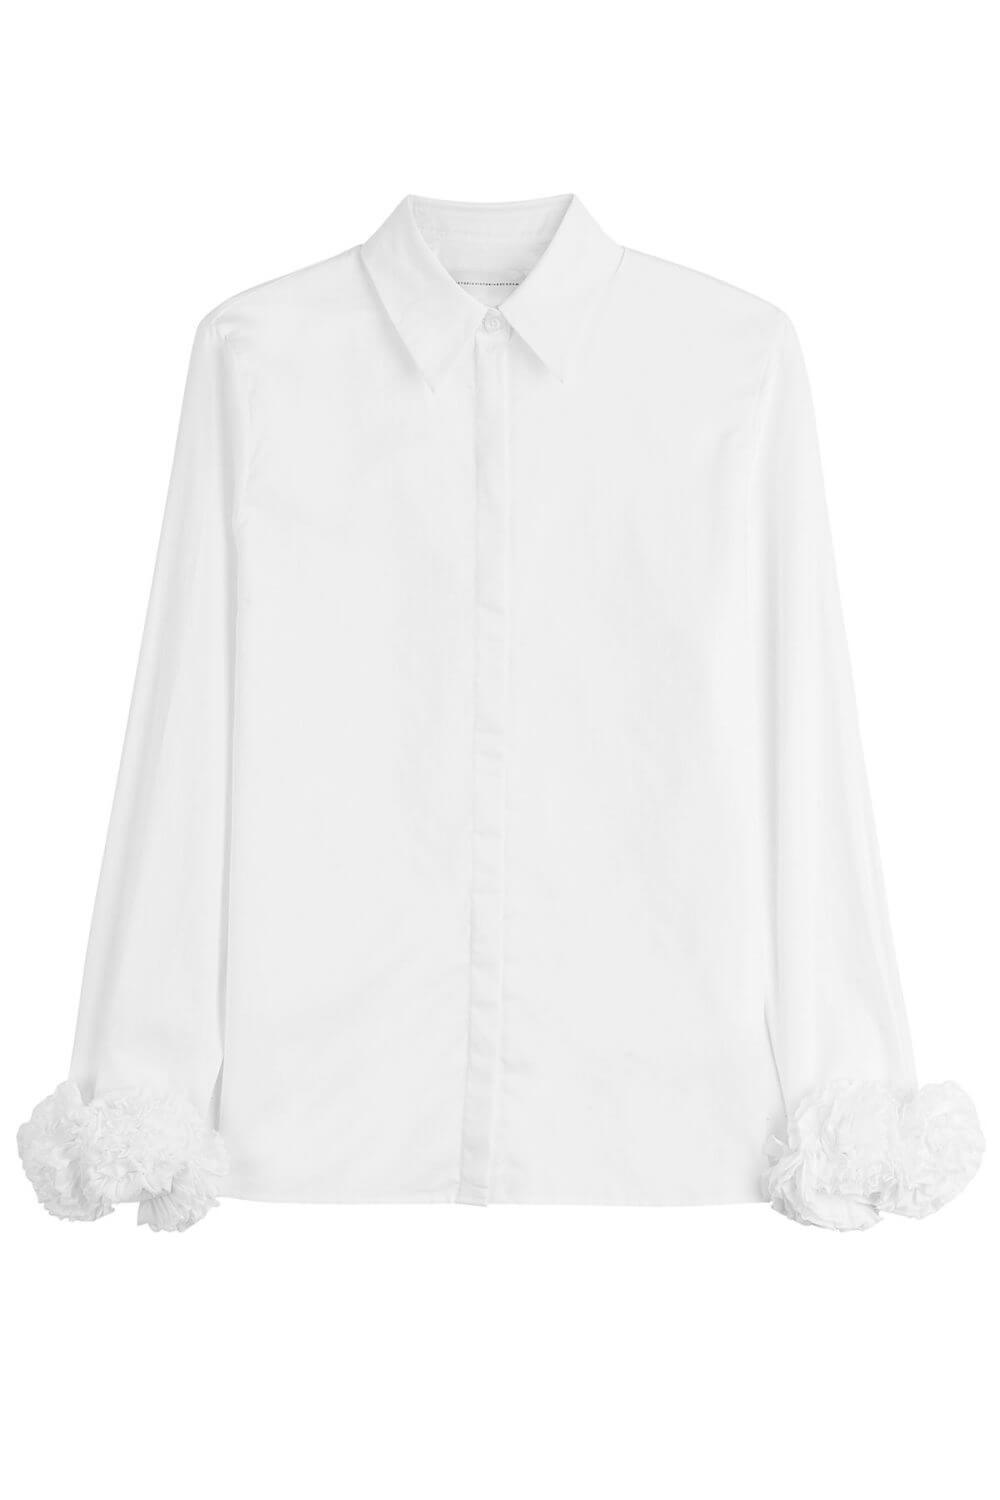 Victoria Victoria Beckham white shirt ruffle sleeves 